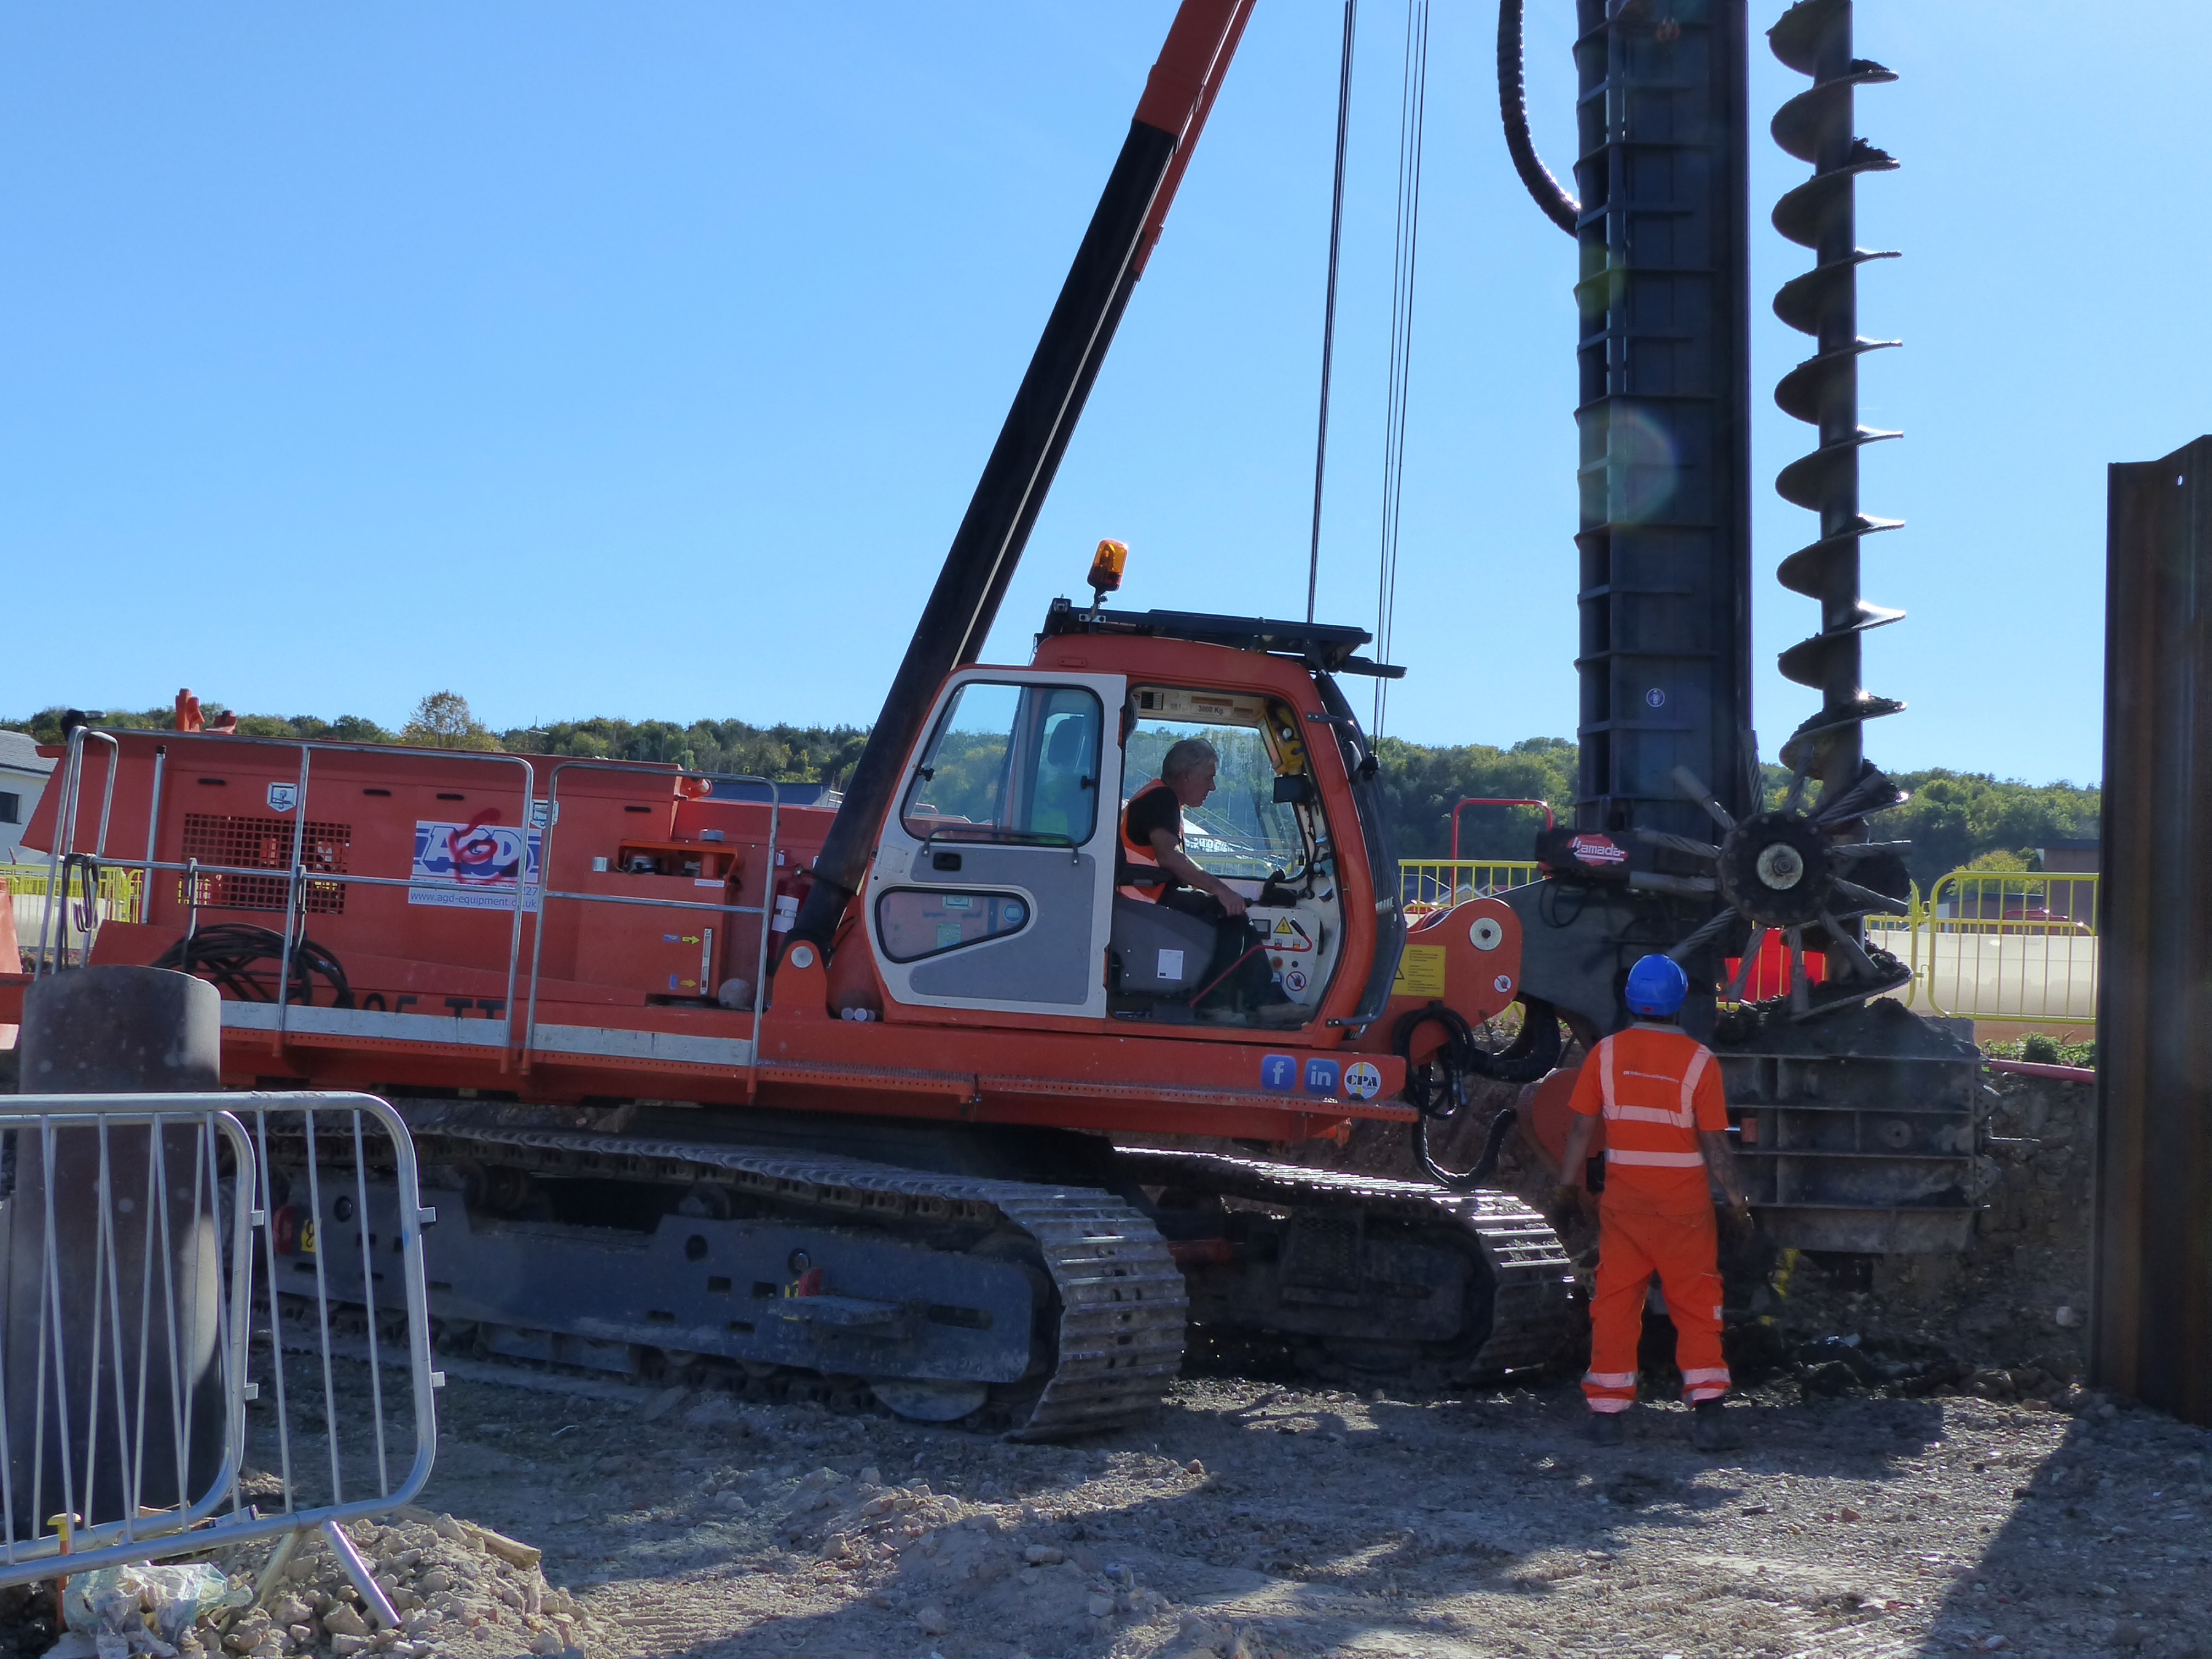 Llamada P105TT CFA piling rig on hire to Volker